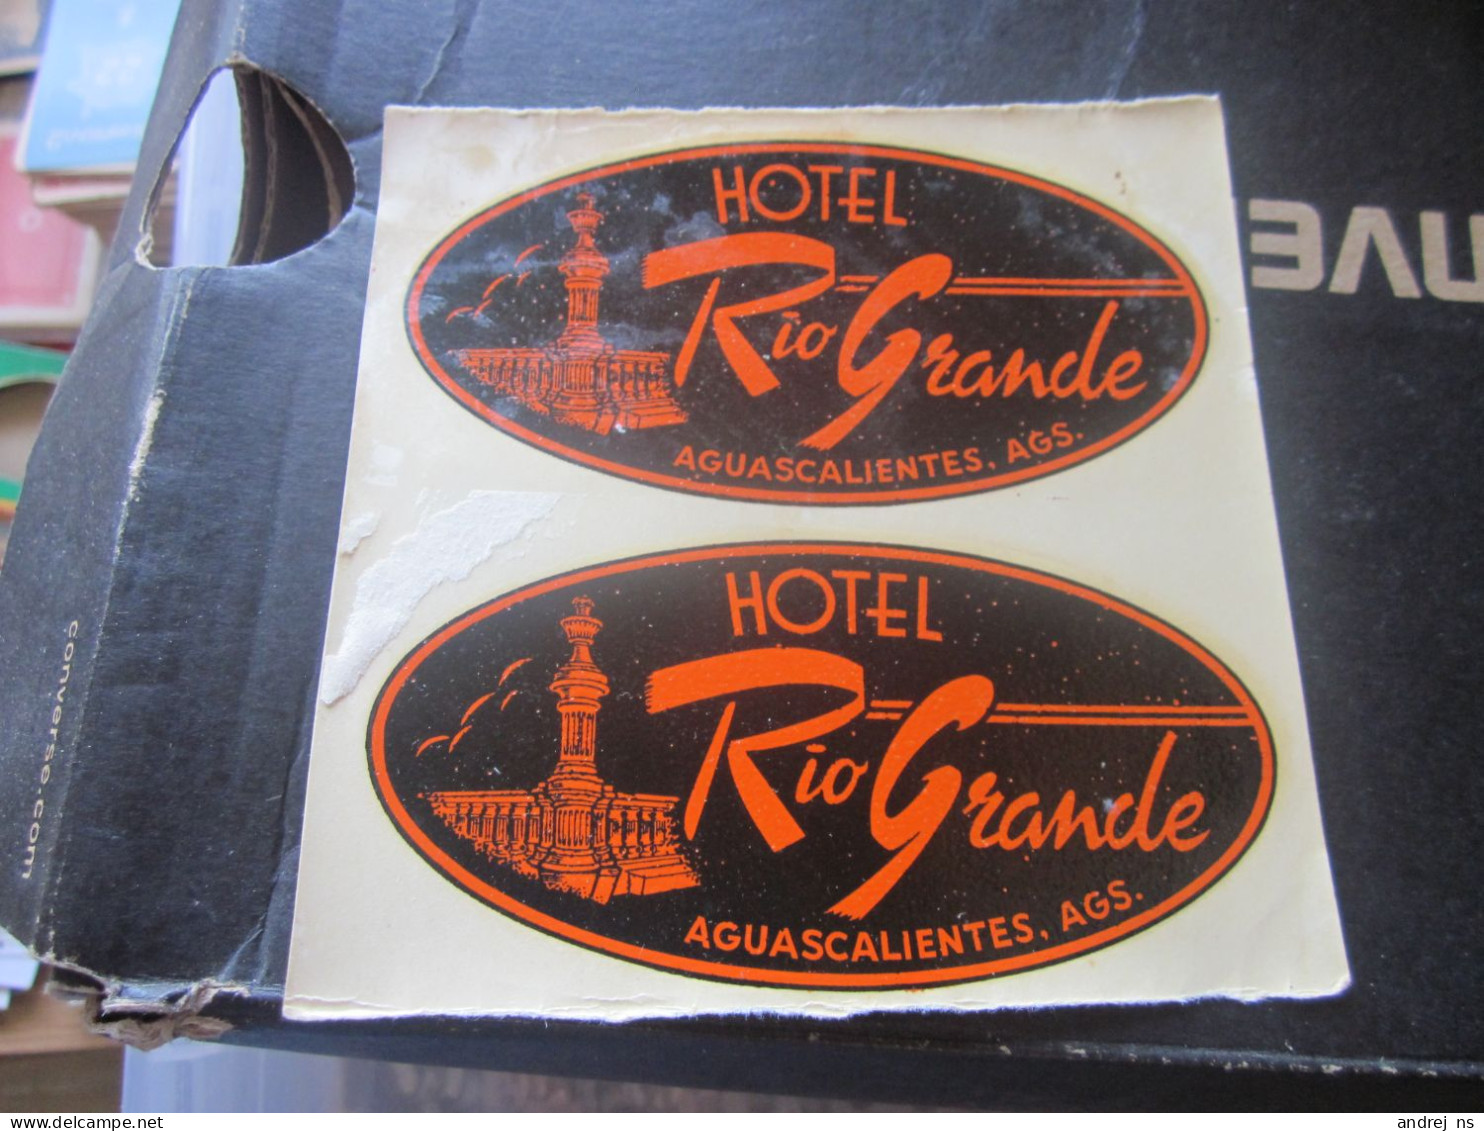 Hotel Rio Grande Aguascalientes Ags - Hotel Labels